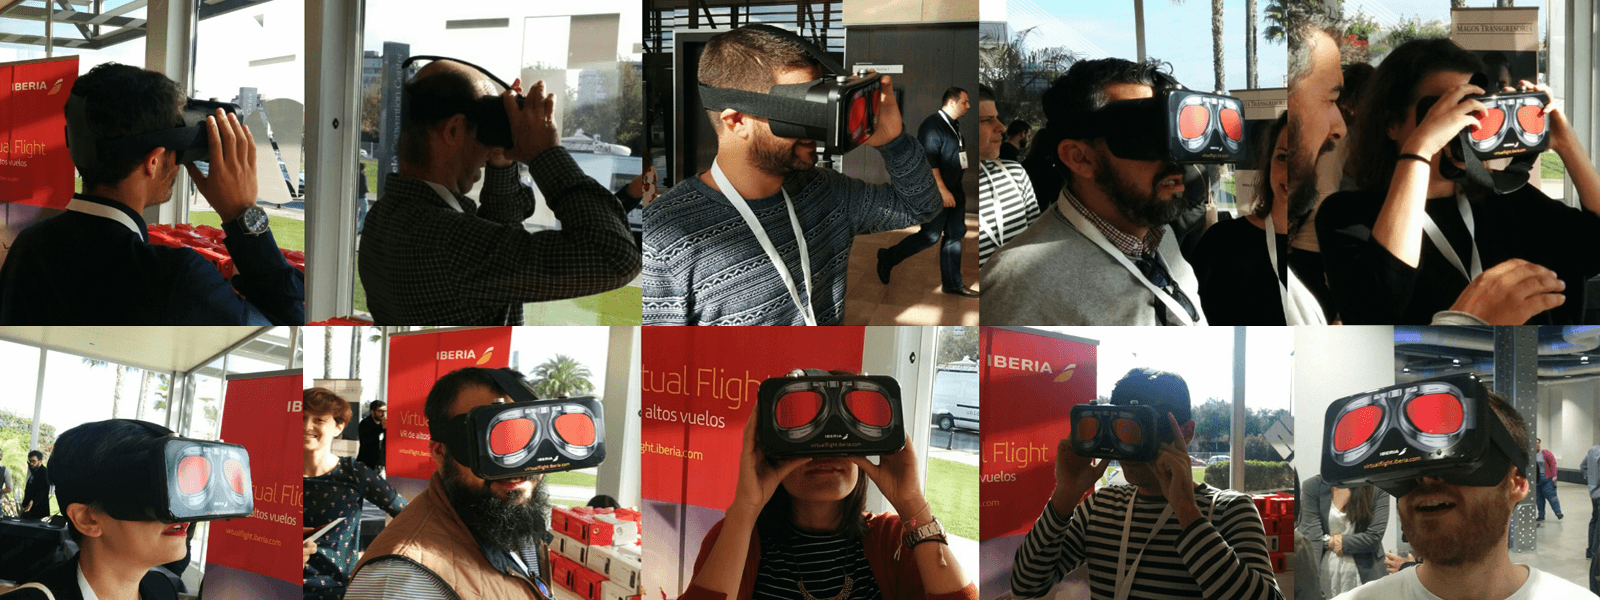 Iberia - Virtual Flight on a exhibition